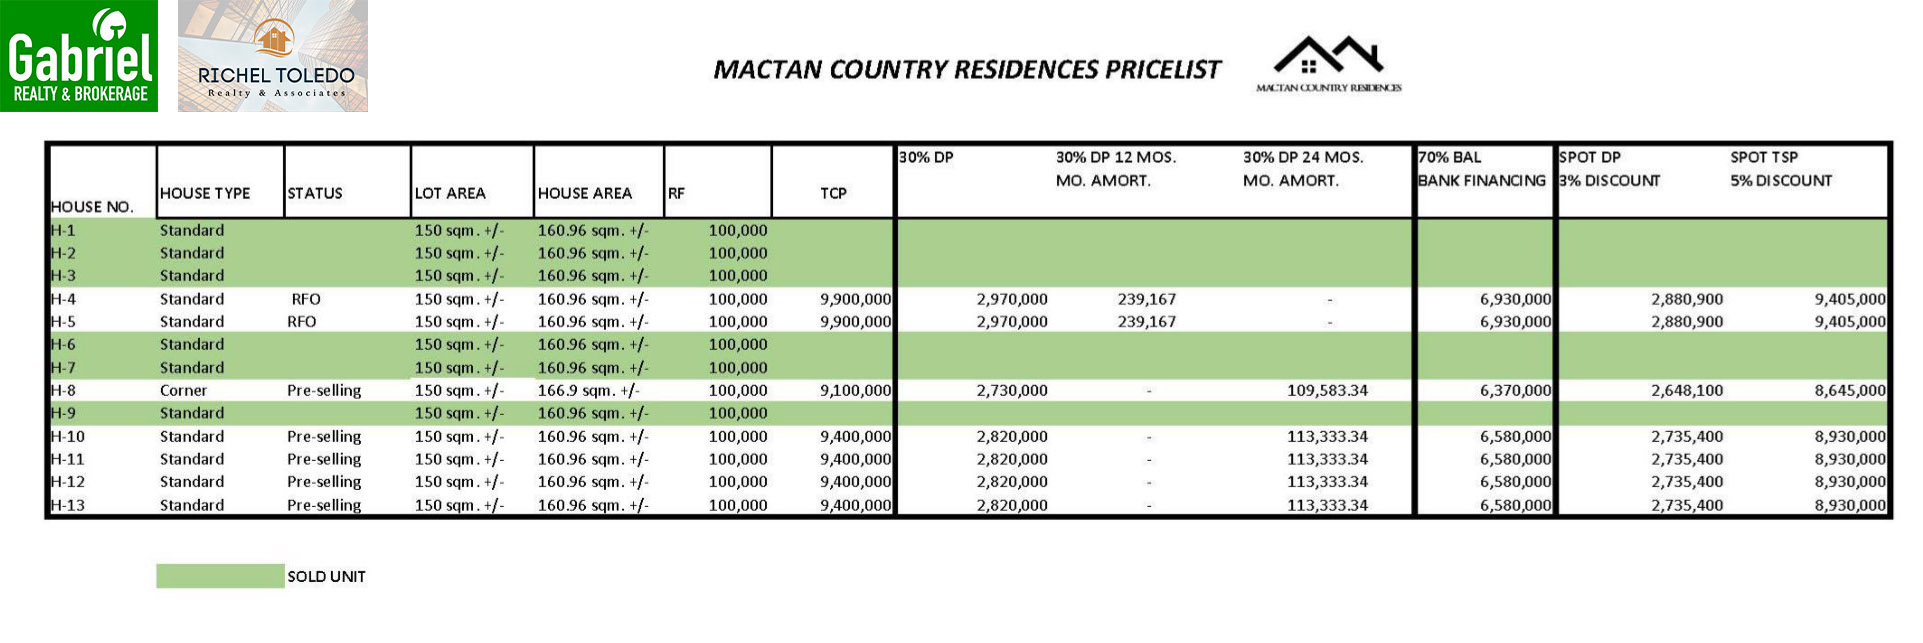 Mactan Country Residences Pricelist